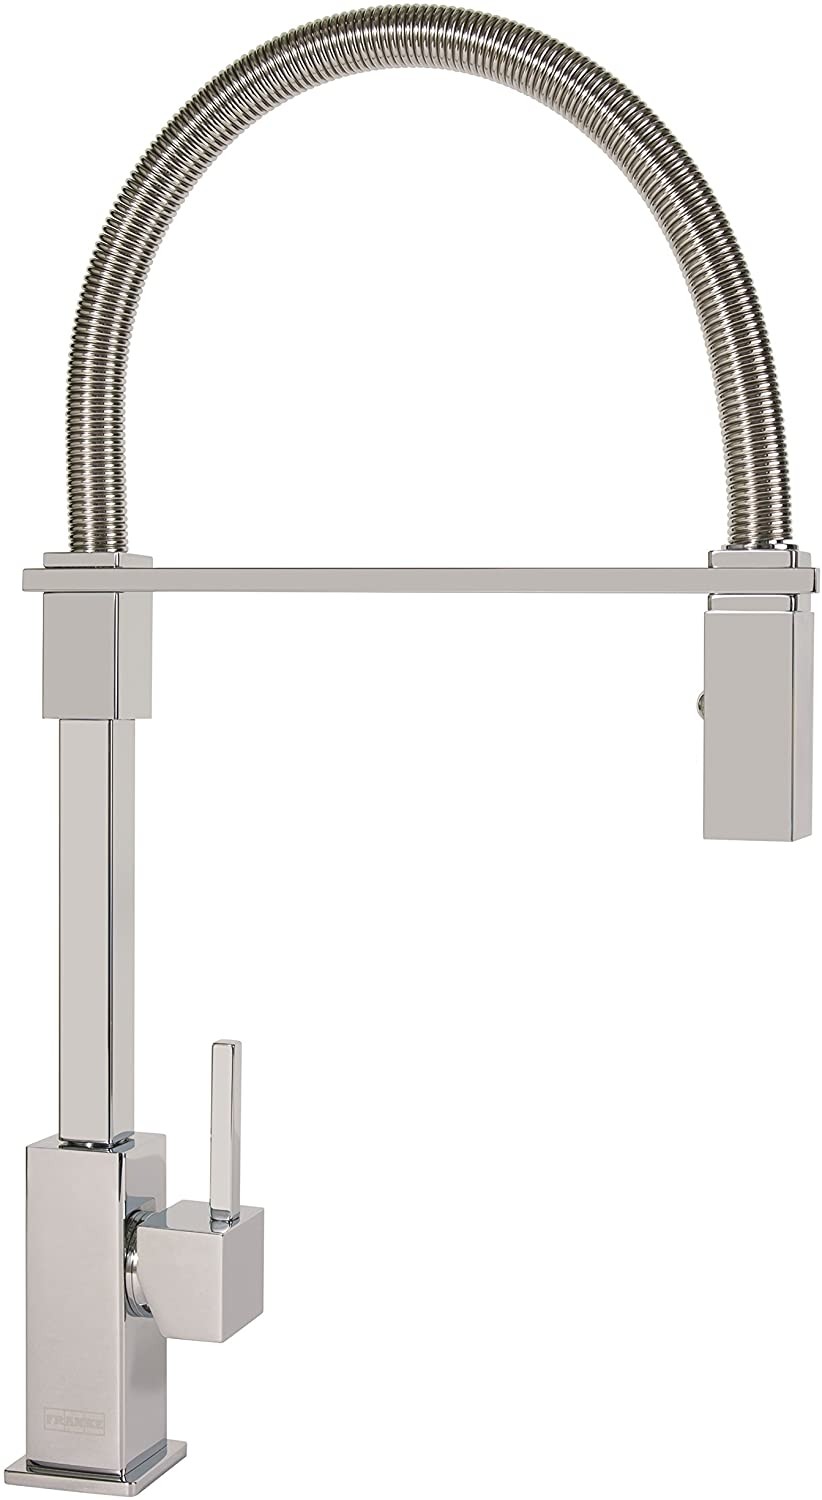 Franke FF2800 Semi-Pro High-Arc Pull-Down Single Handle Kitchen Faucet, Chrome